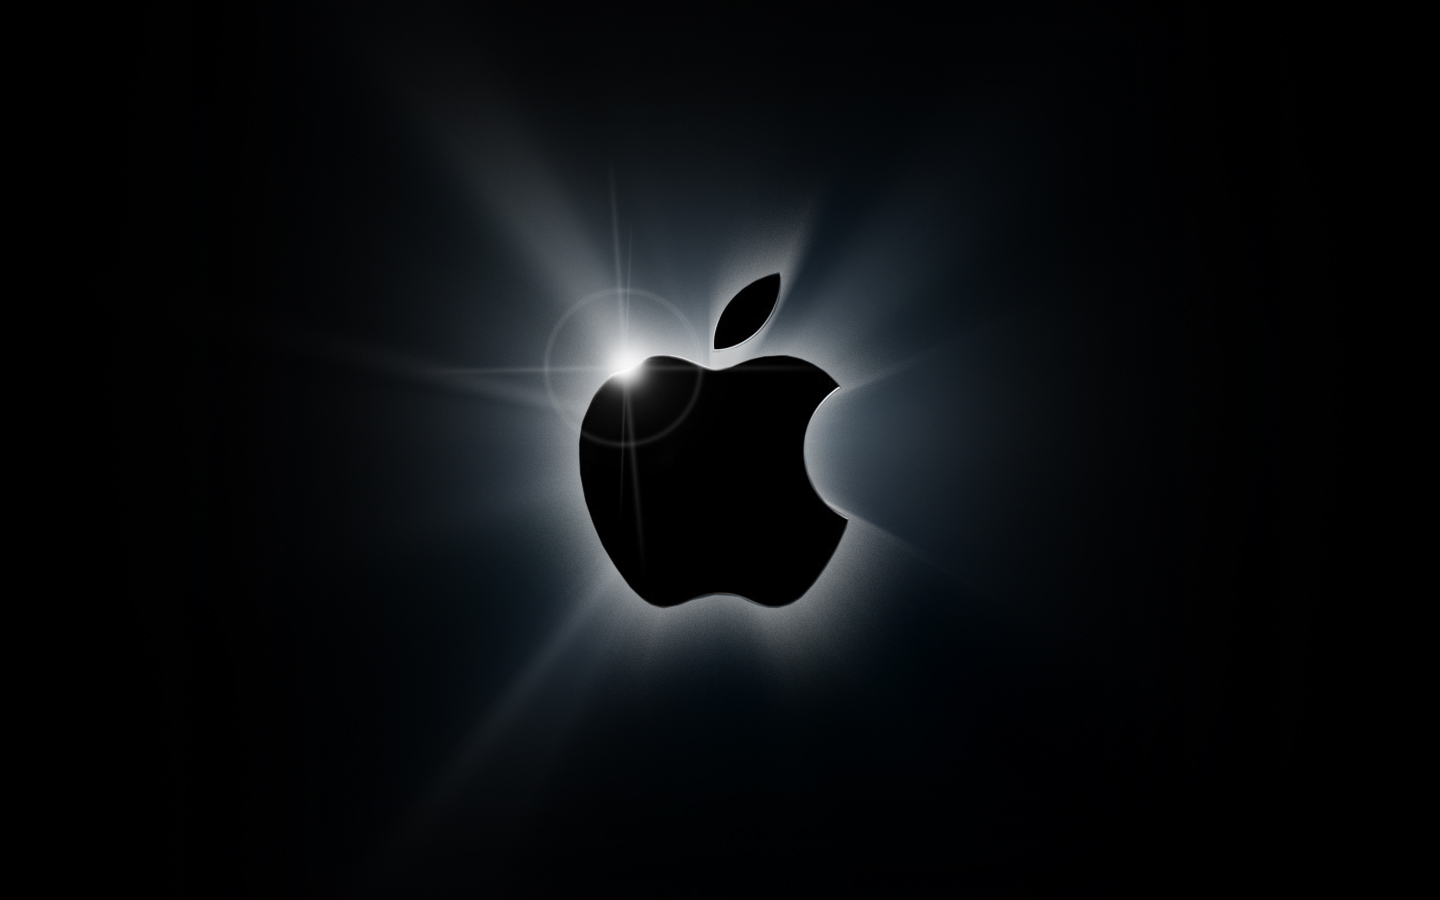 Blaming Apple's head of global security: bribed $ 70k iPad for license